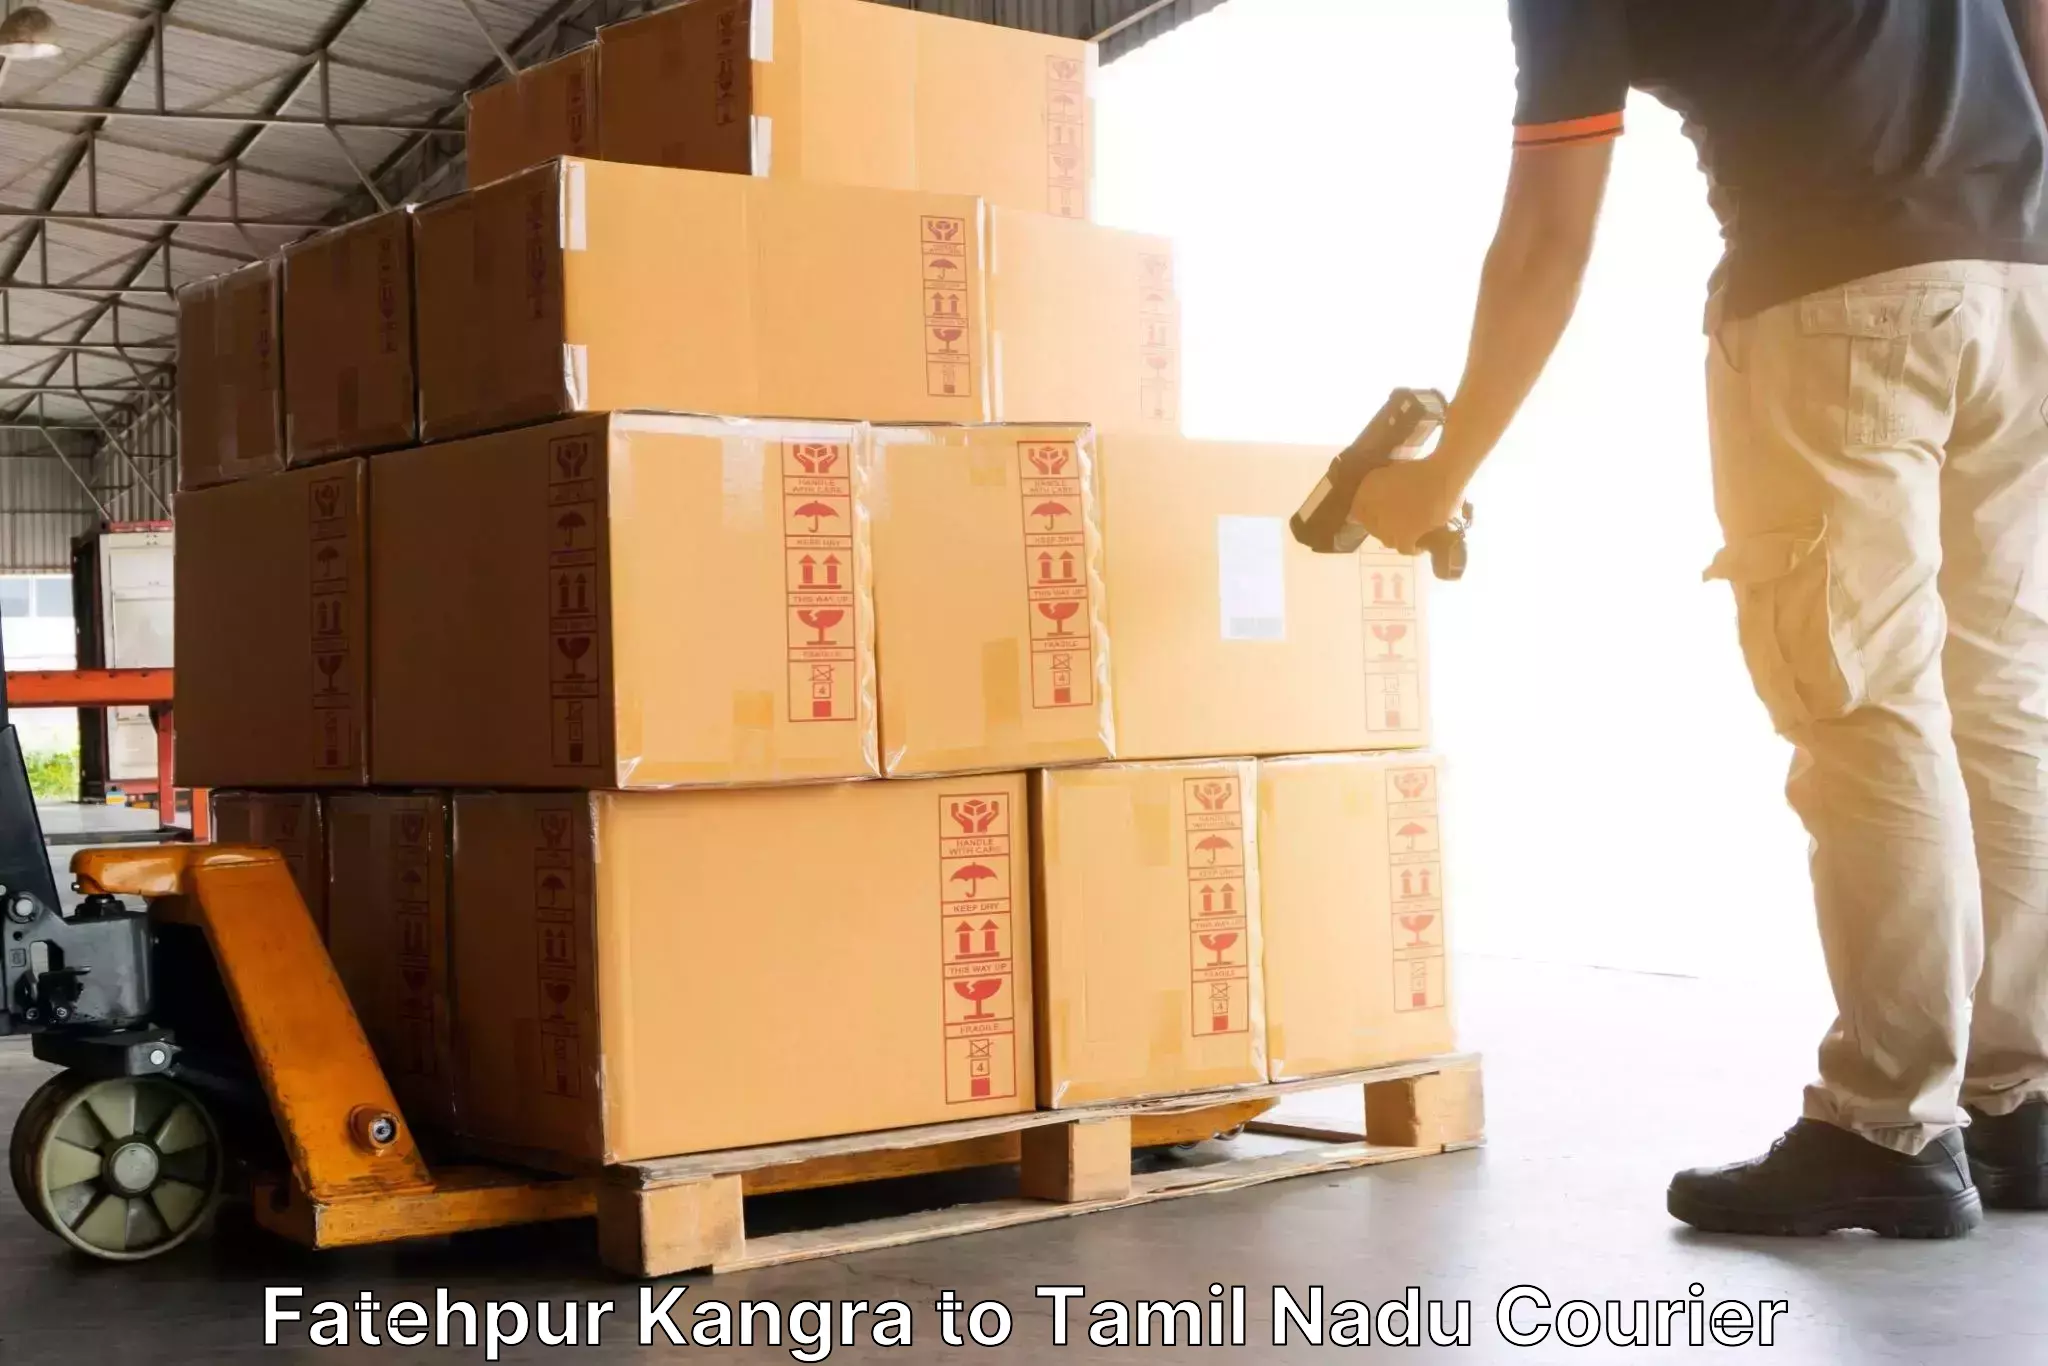 Courier service booking Fatehpur Kangra to Dharapuram